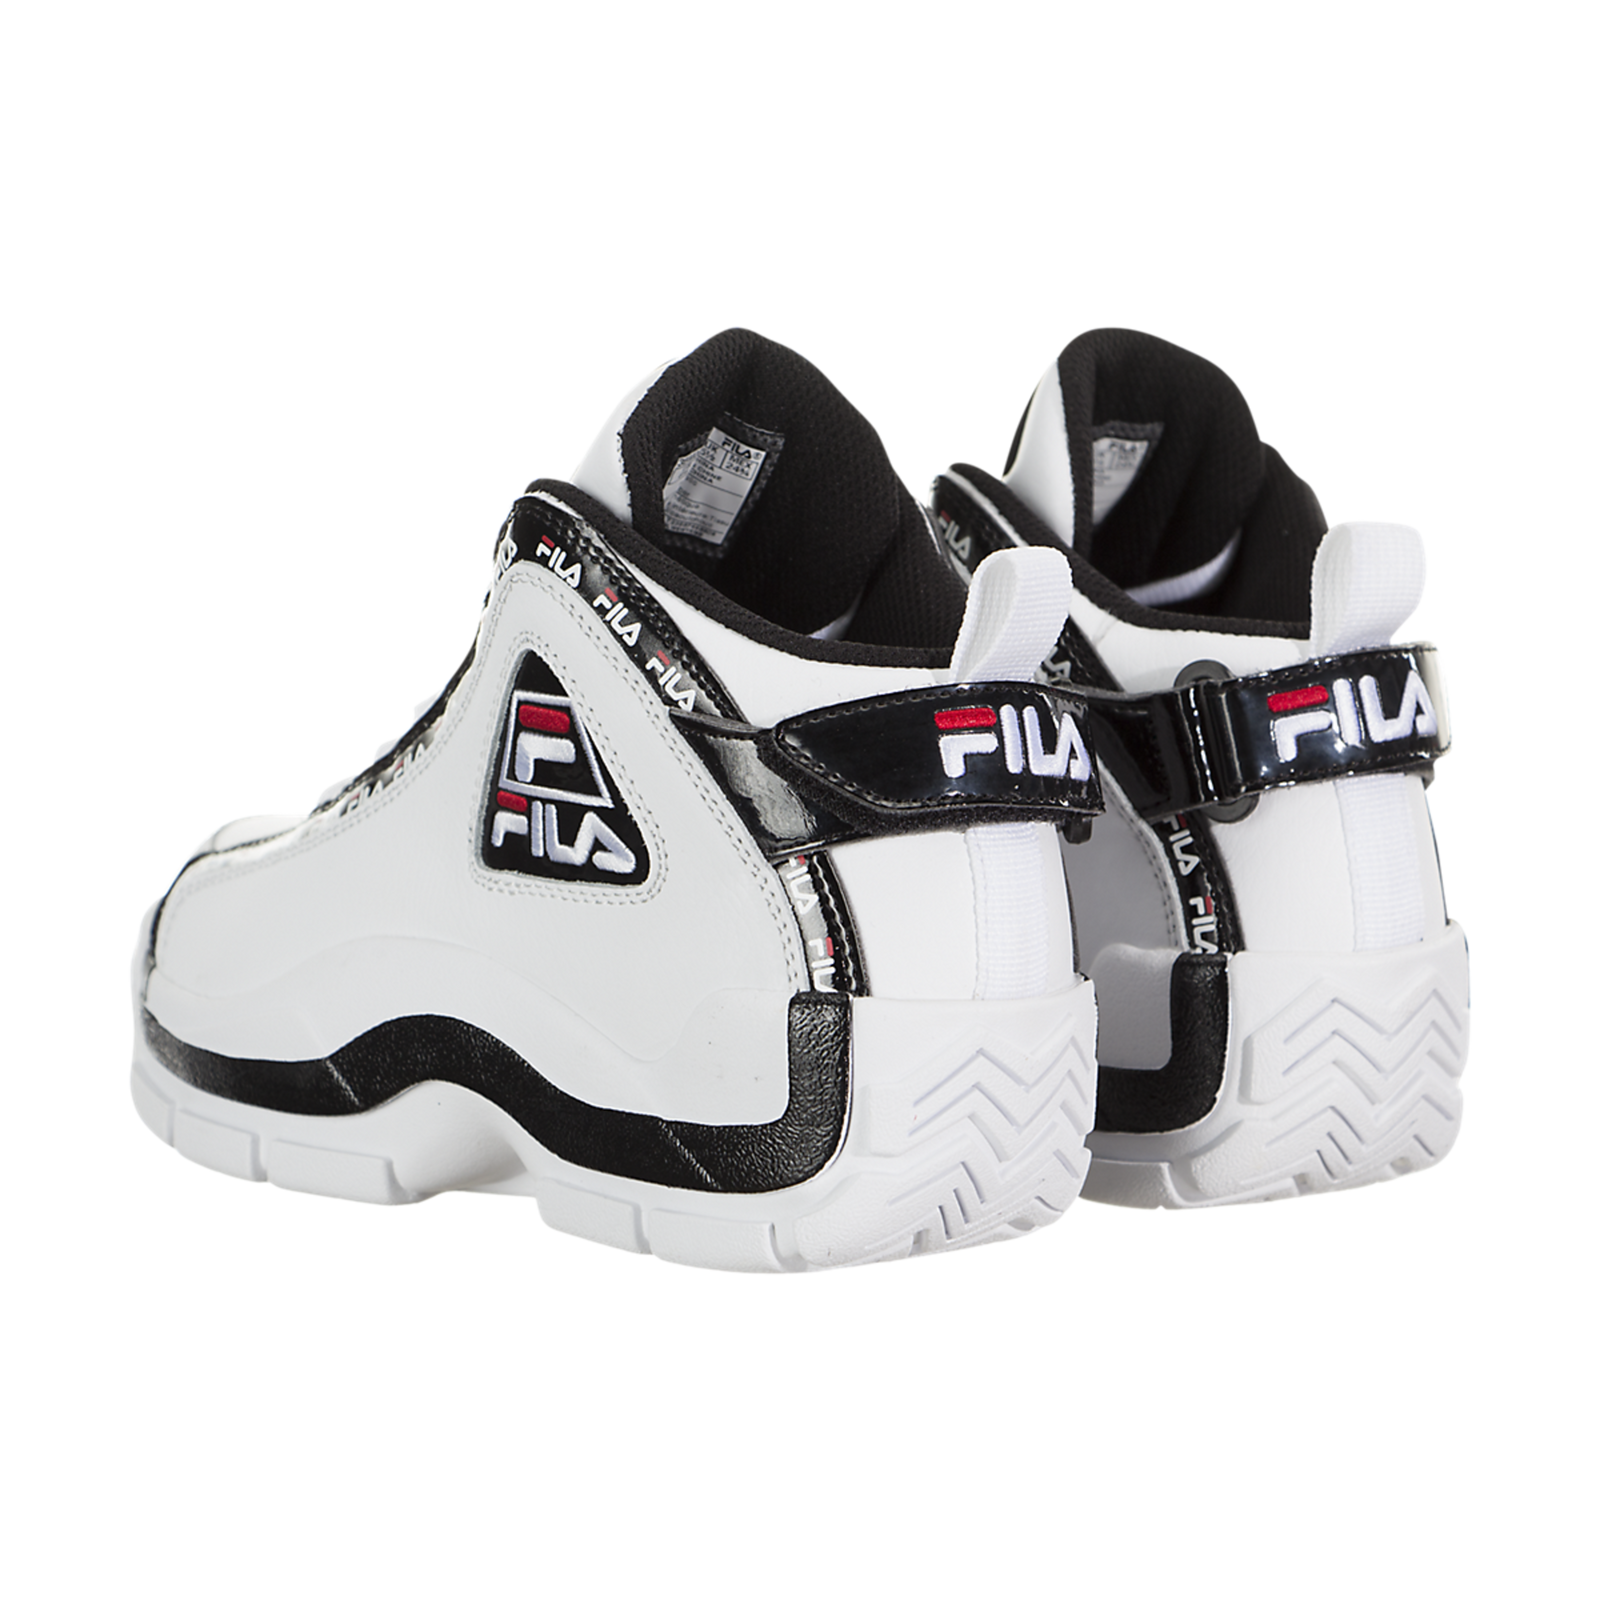 FILA Grant Hill 2 Repeat (Kids) - 3bm00781-113 - Sneakerhead.com ...